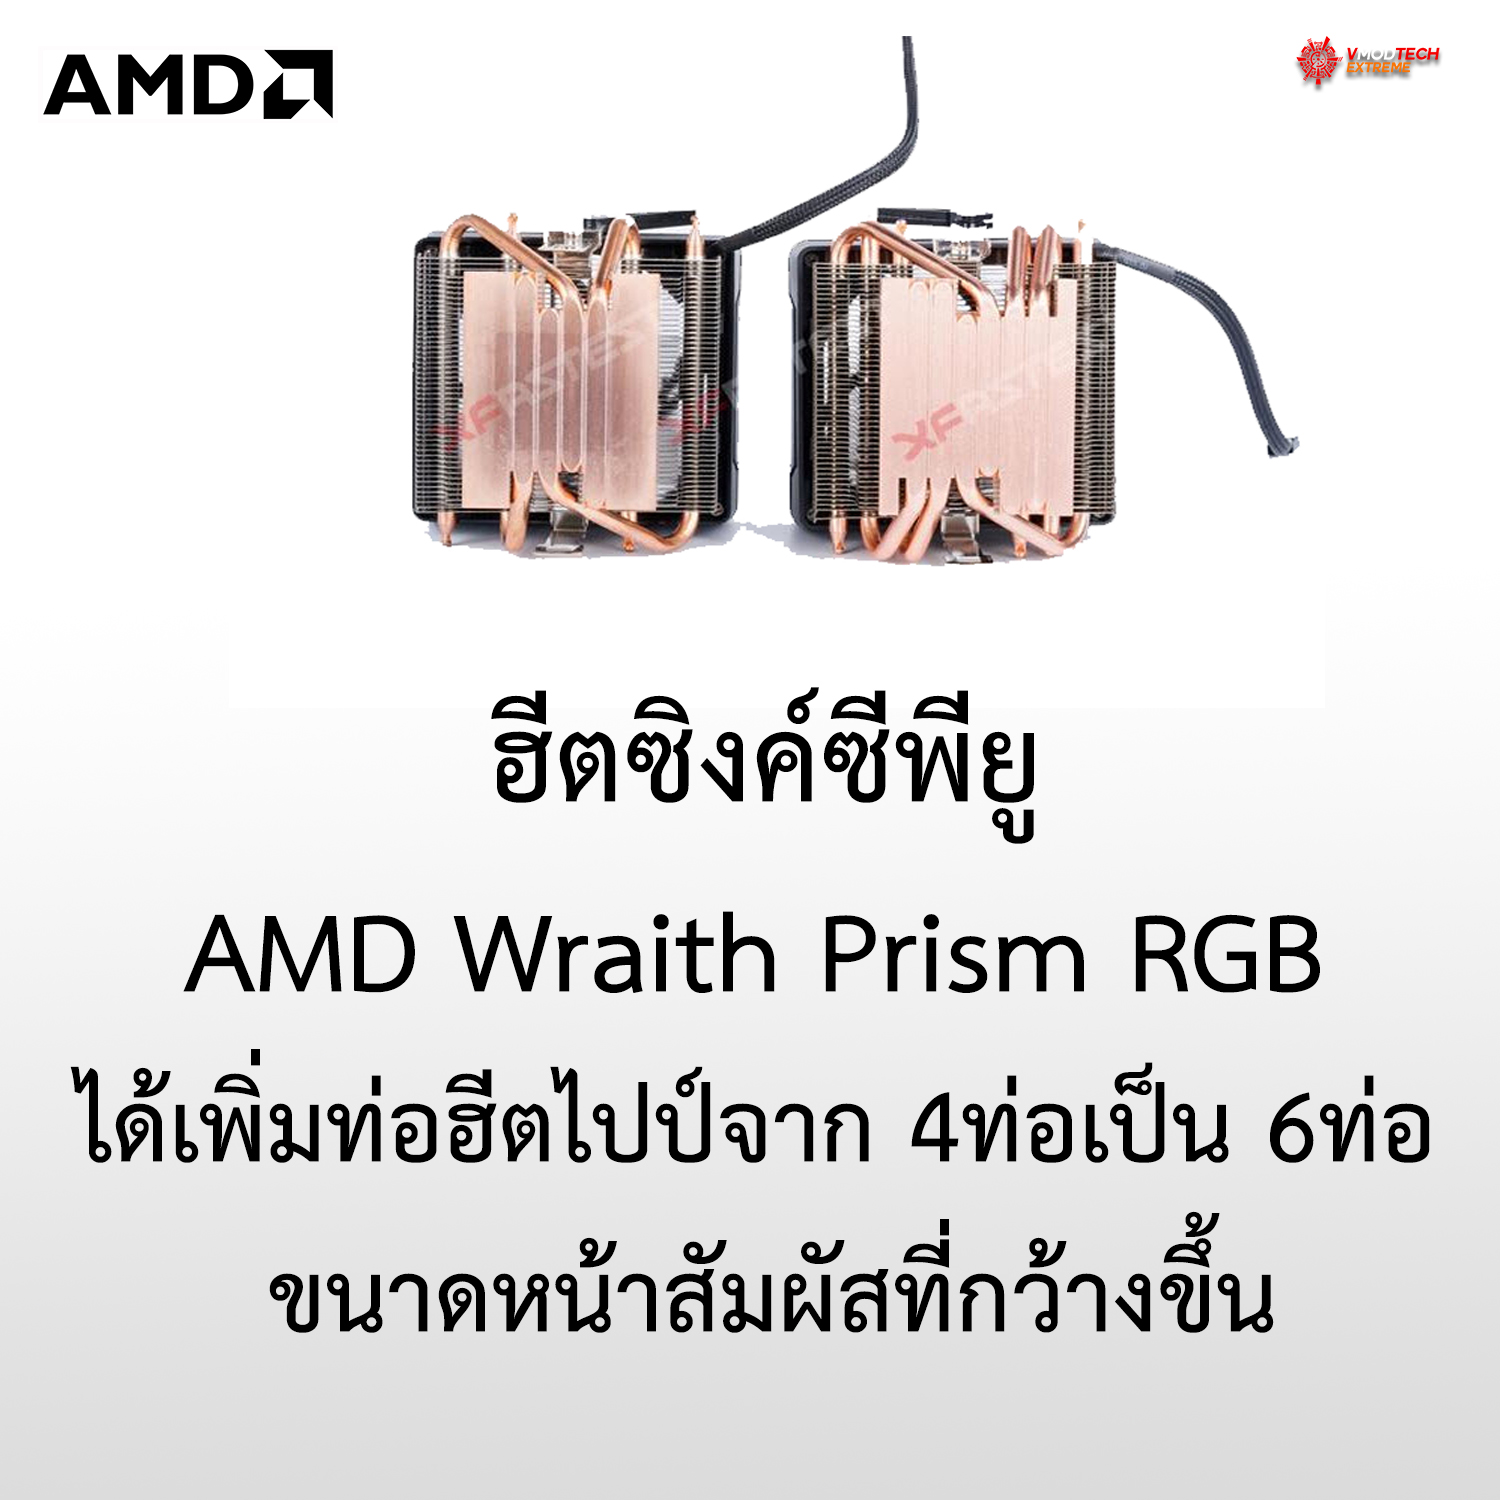 amd wraith prism rgb 6heat pipes1 ฮีตซิงค์ AMD Wraith Prism RGB ได้เพิ่มท่อฮีตไปป์จาก 4ท่อเป็น 6ท่อ ขนาดหน้าสัมผัสที่กว้างขึ้น